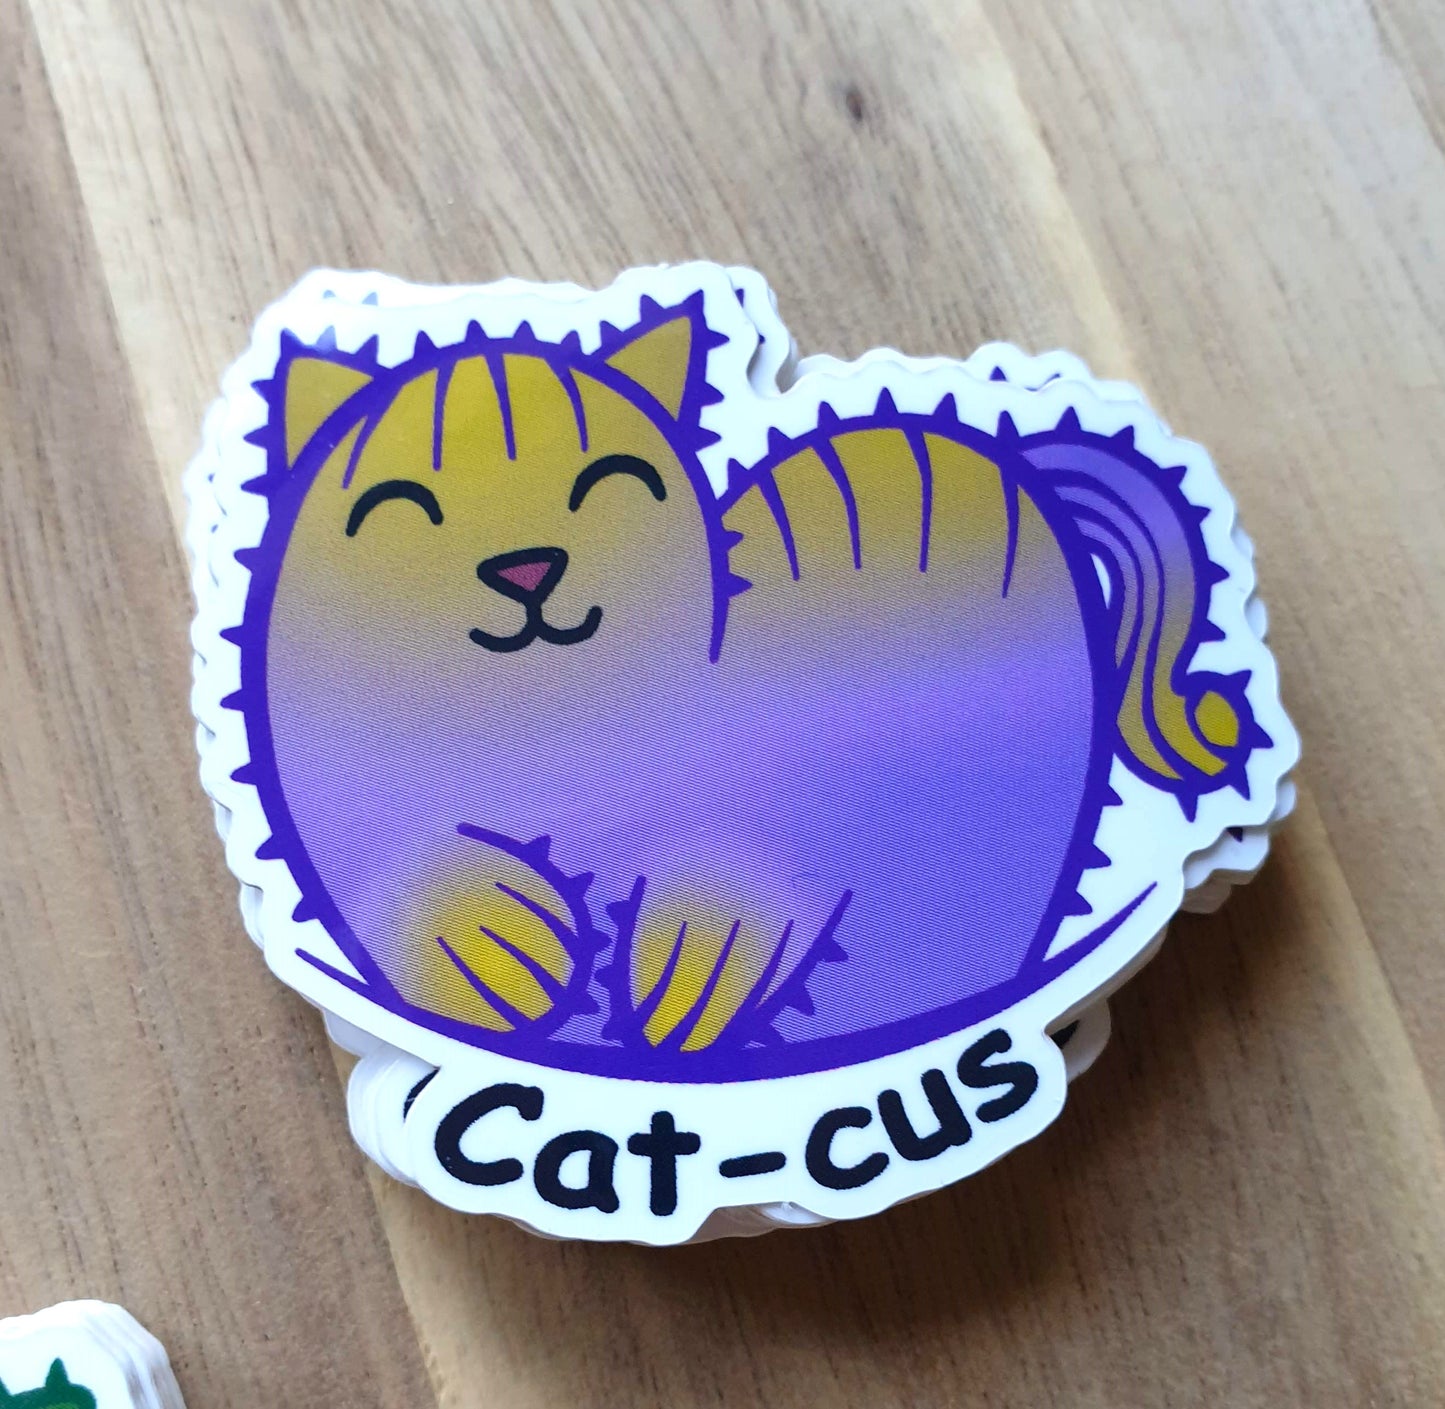 Cactus Sticker - "Cat-cus" - yellow and purple